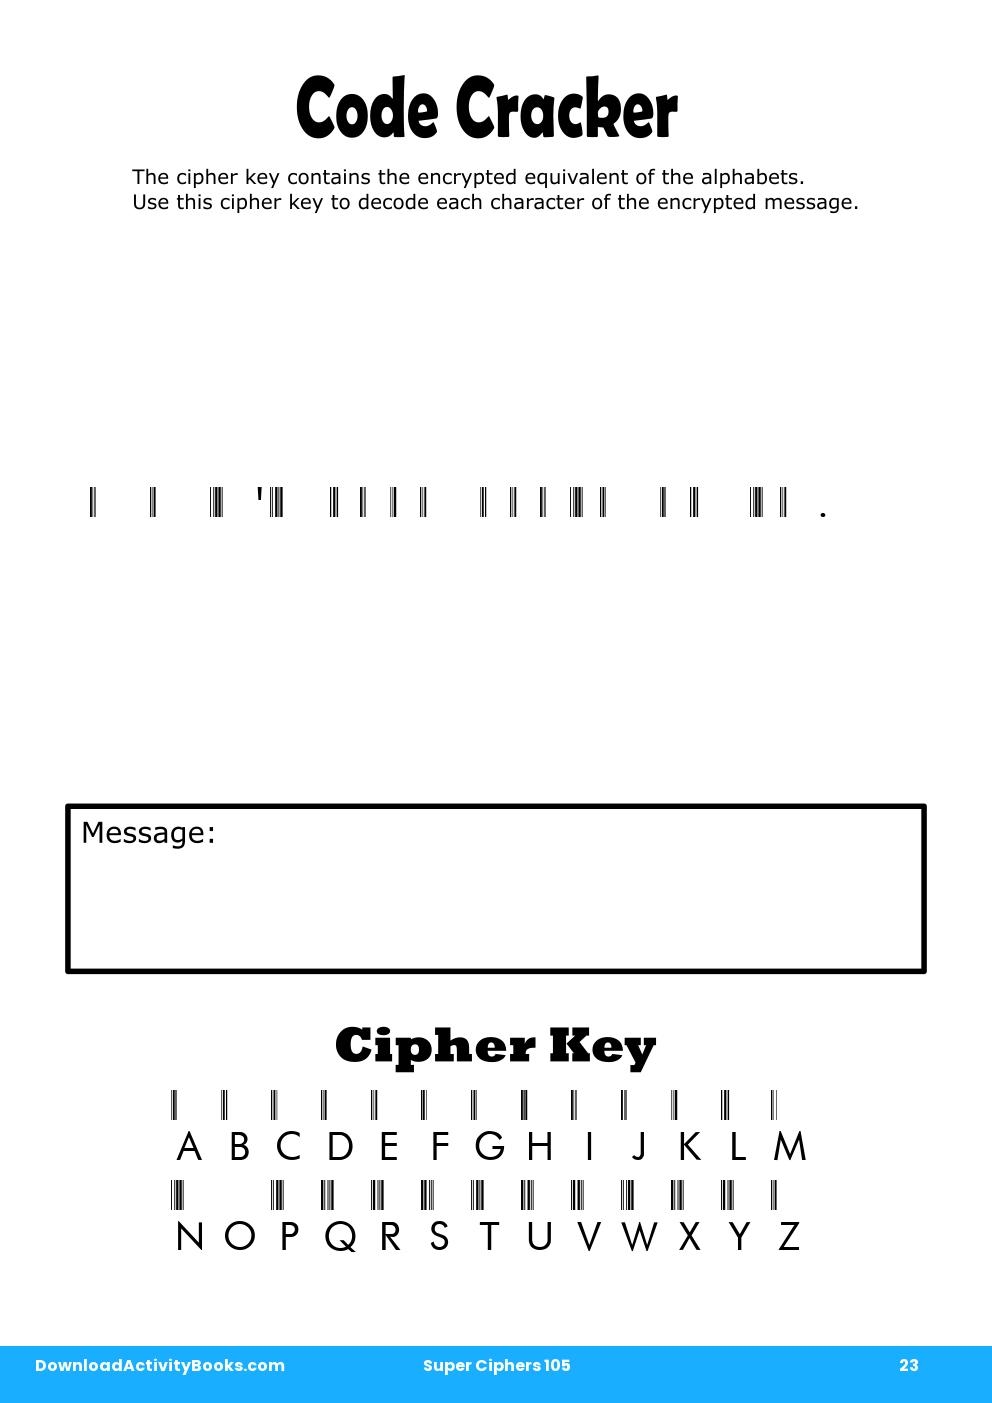 Code Cracker in Super Ciphers 105